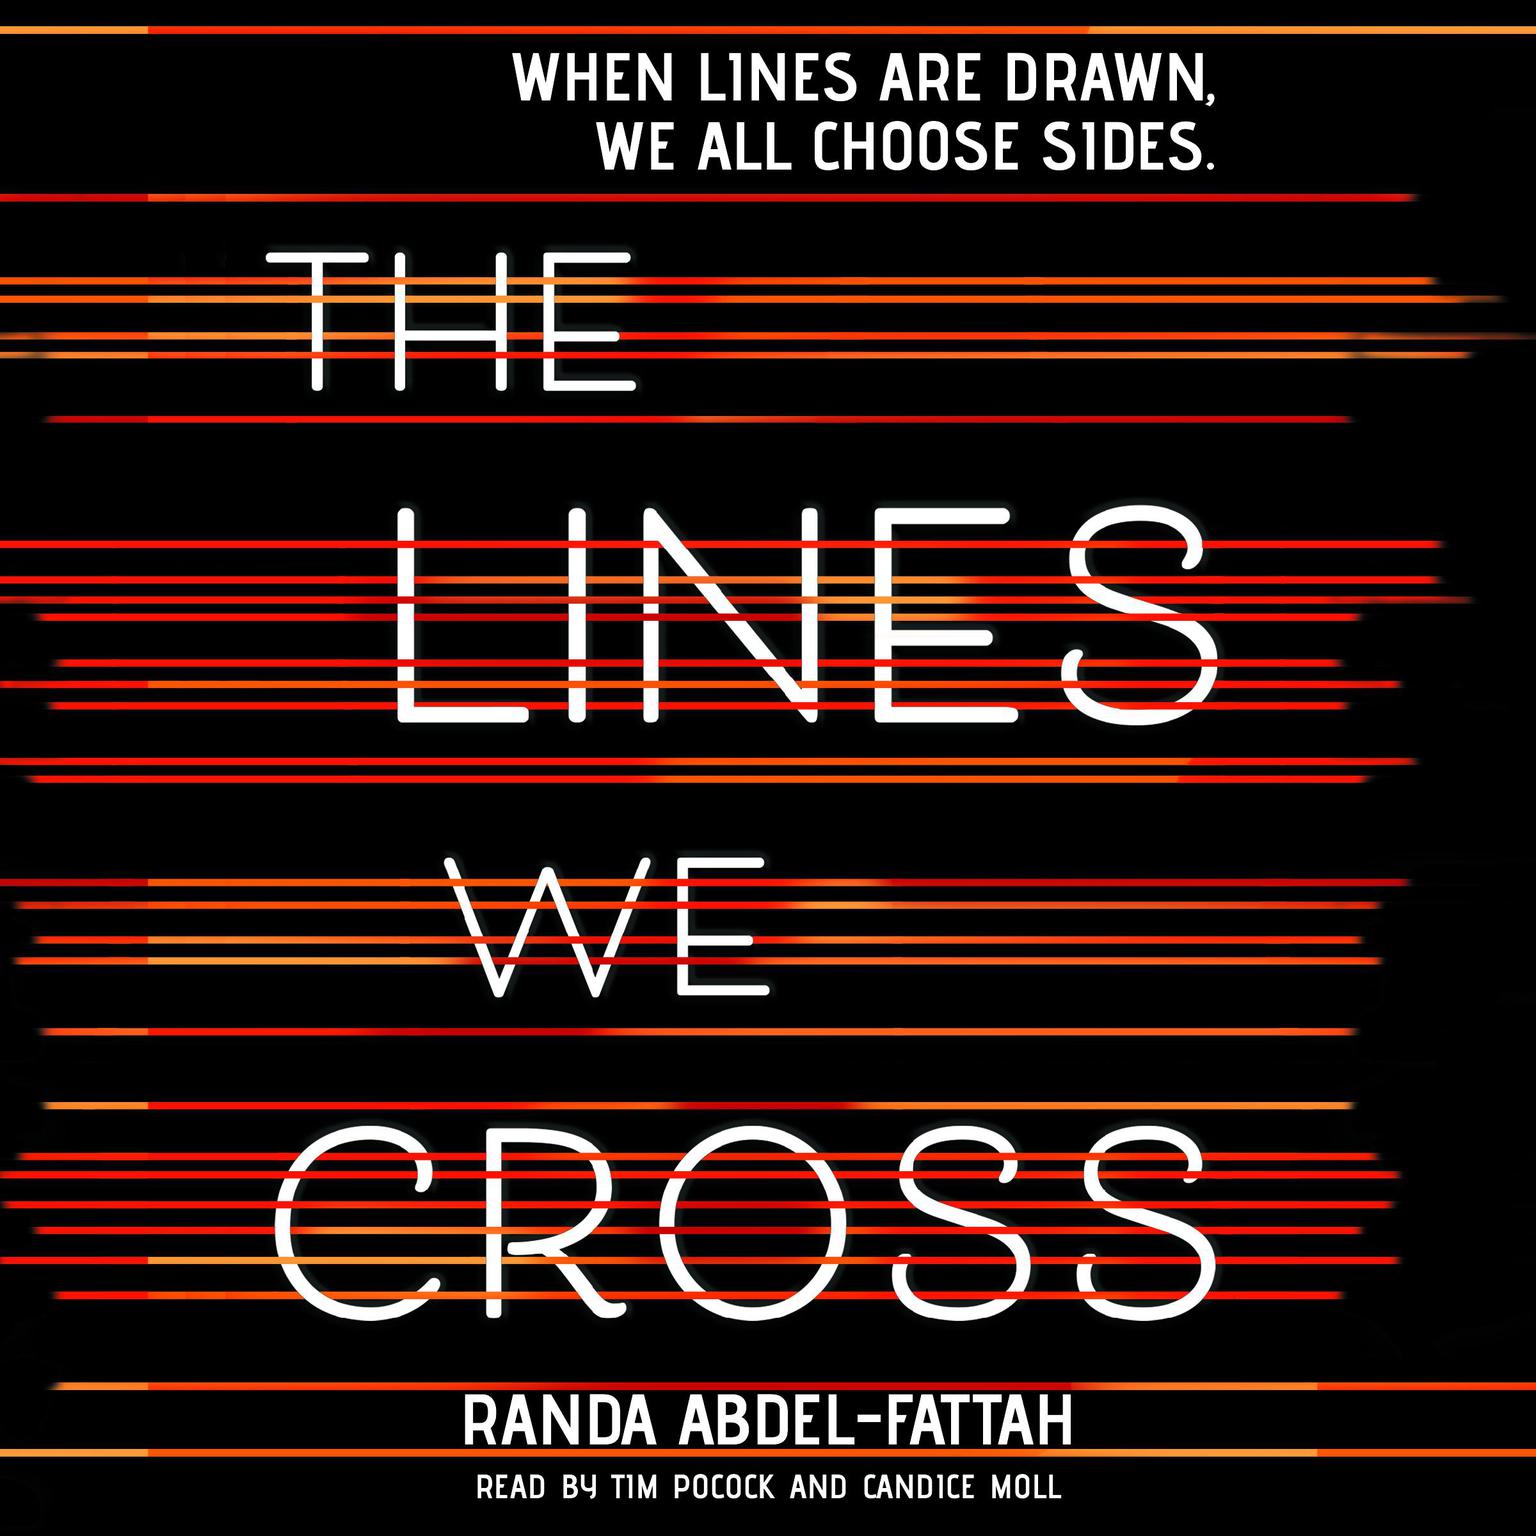 The Lines We Cross Audiobook, by Randa Abdel-Fattah